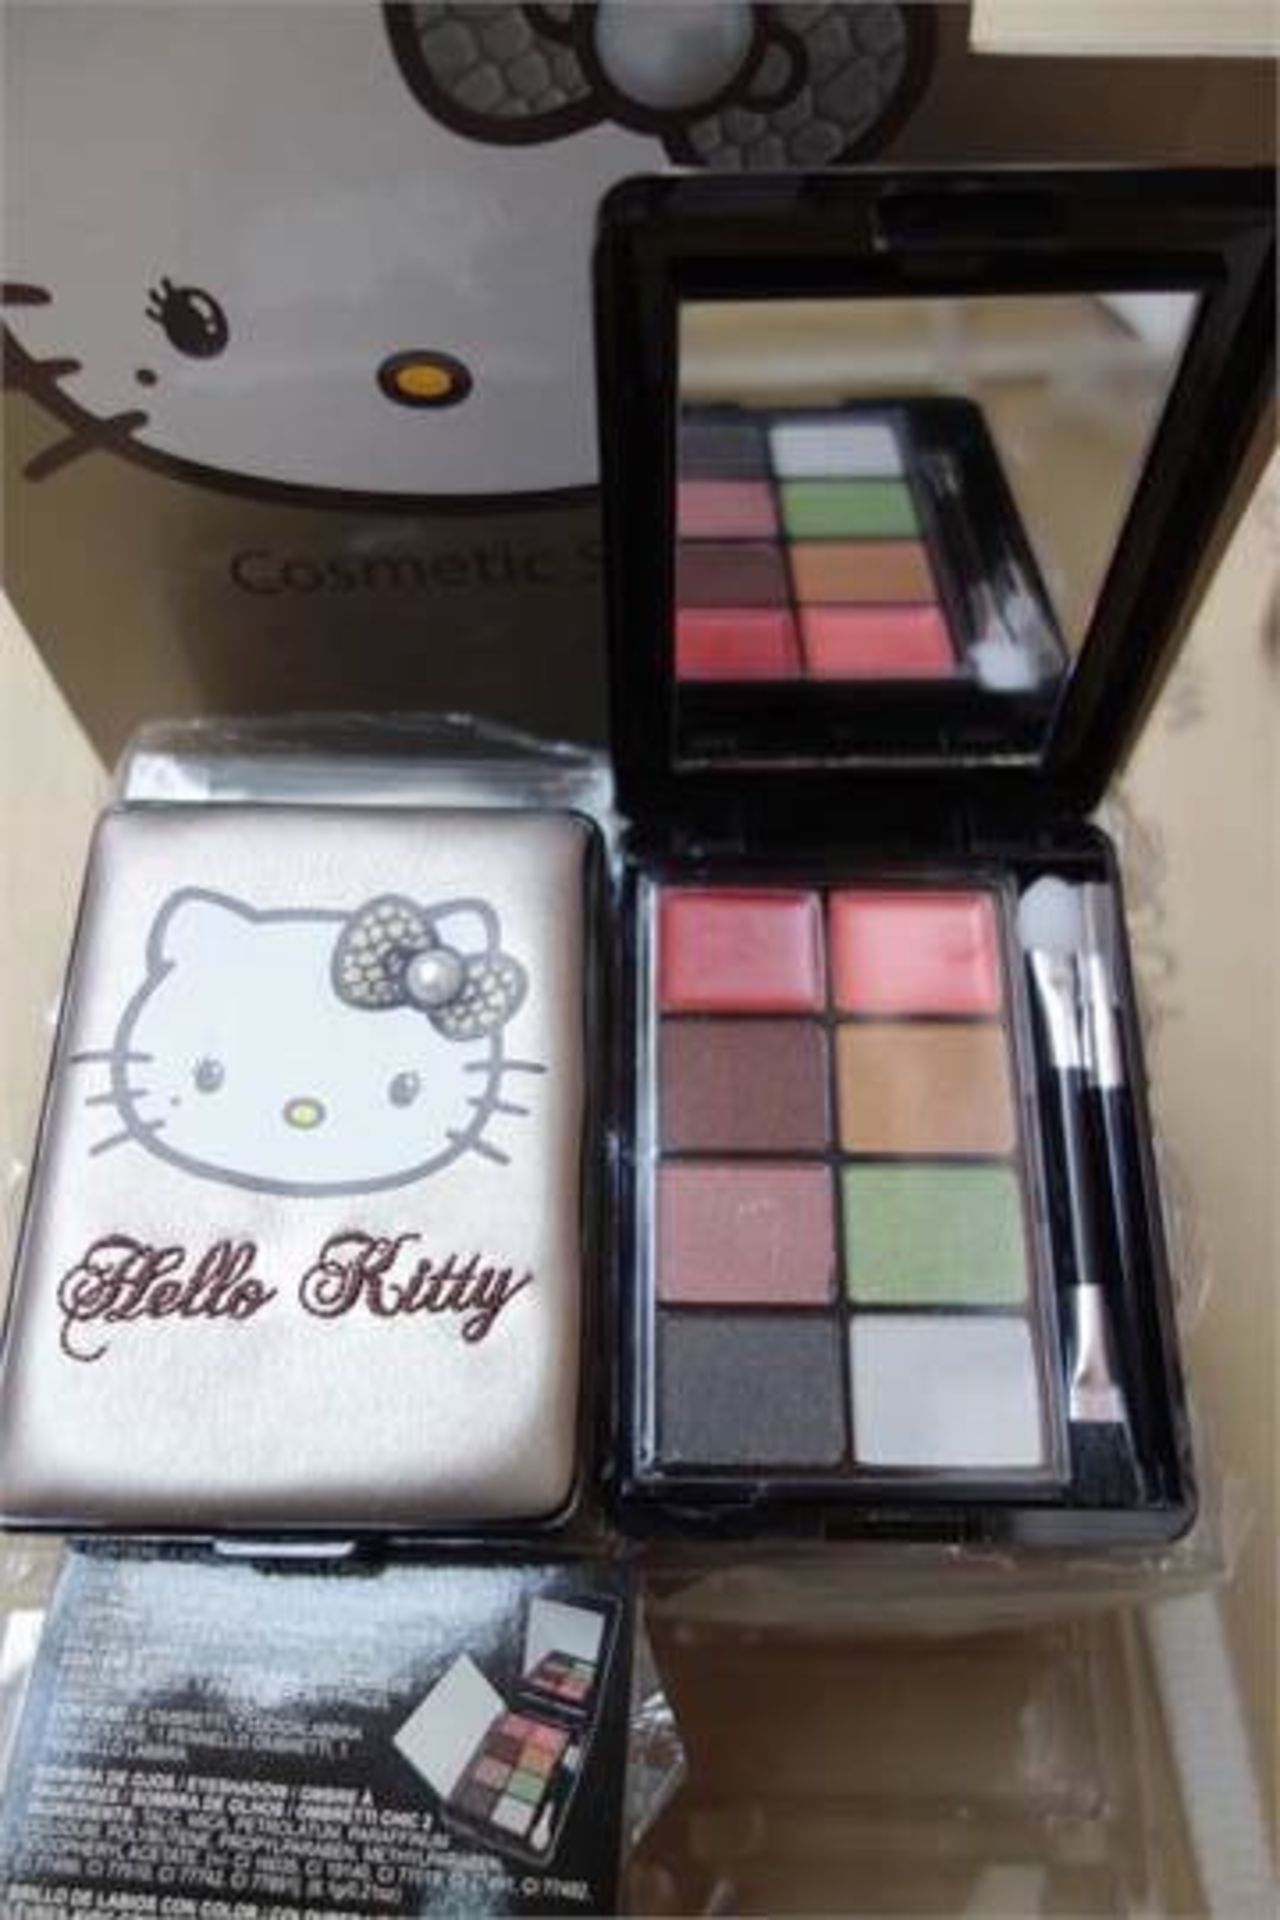 48 x Hello Kitty Cosmetic Sets - Each Set Contains 6 Eyeshadow, 2 Coloured Lip Gloss, 1 Eyebrush,